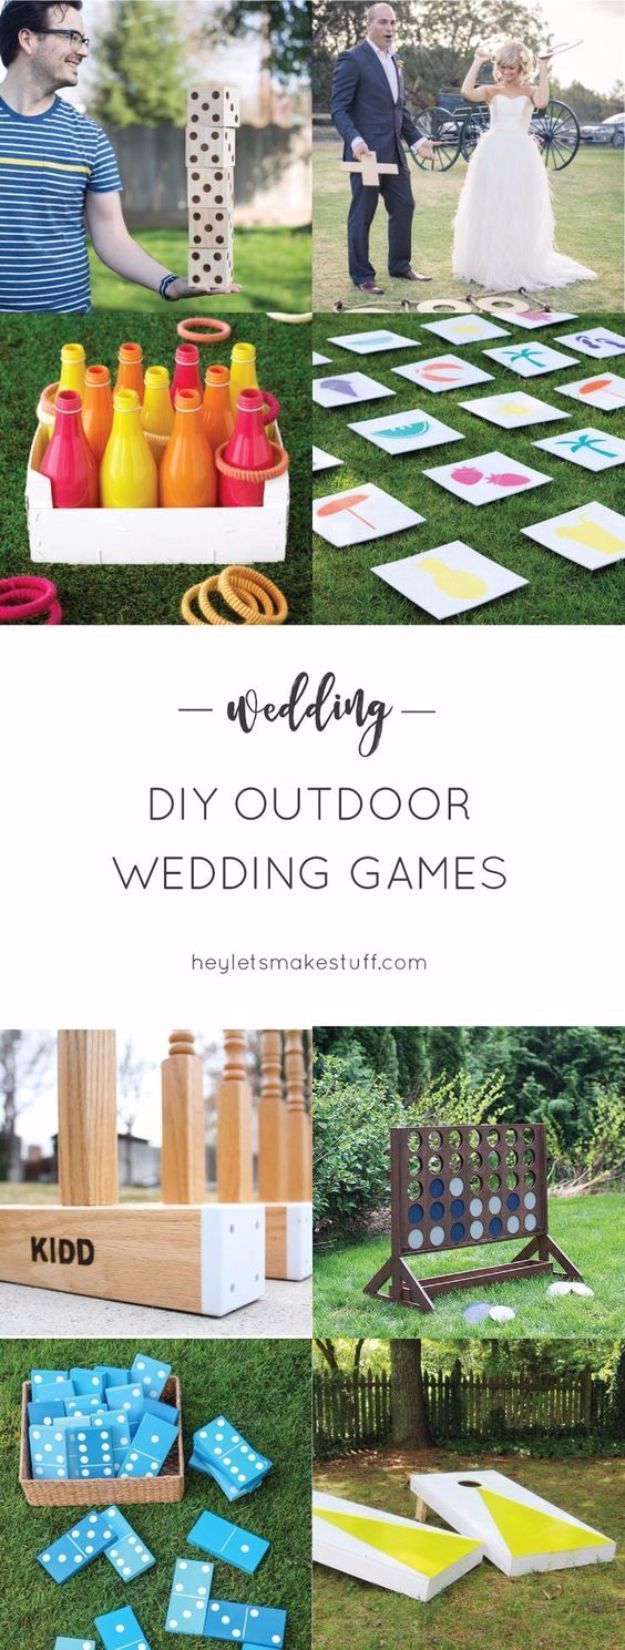 DIY Outdoor Wedding Decor Ideas - 41 Decorations For Weddings -   18 cheap wedding Games ideas